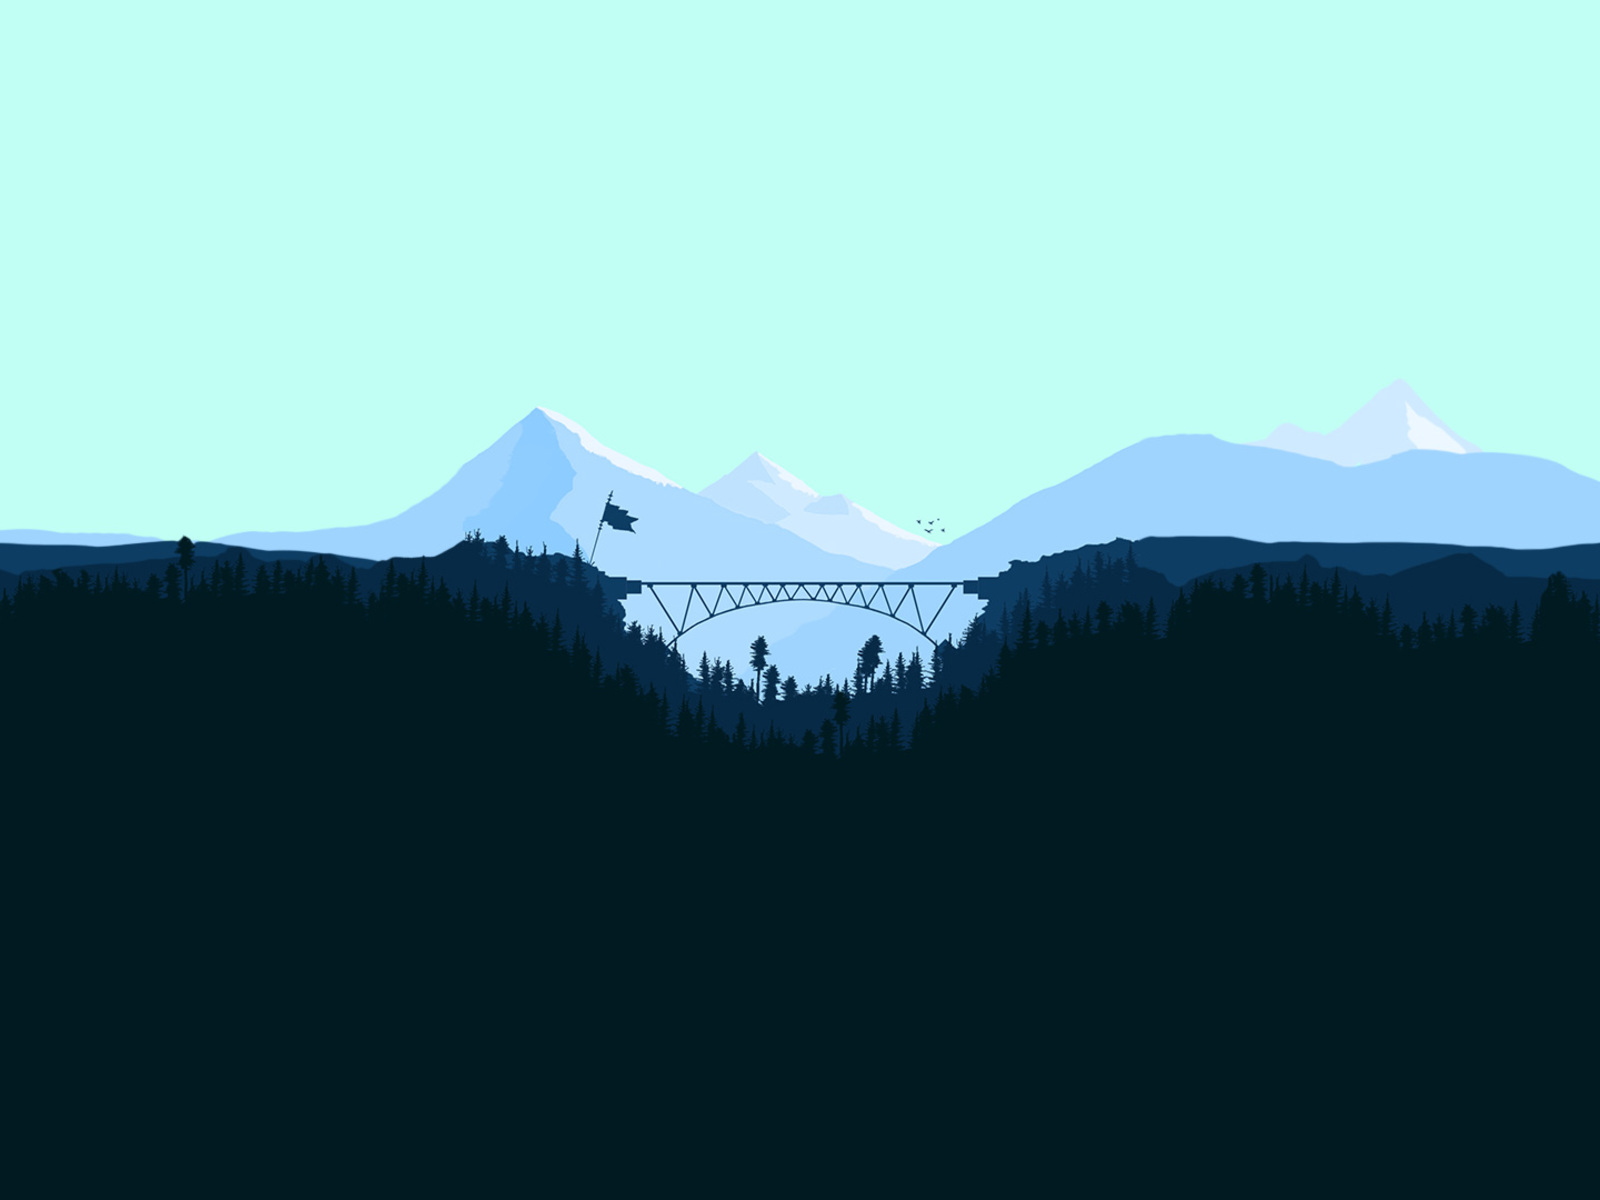 bridge-between-two-mountains-forest-minimalism-artwork-ks.jpg